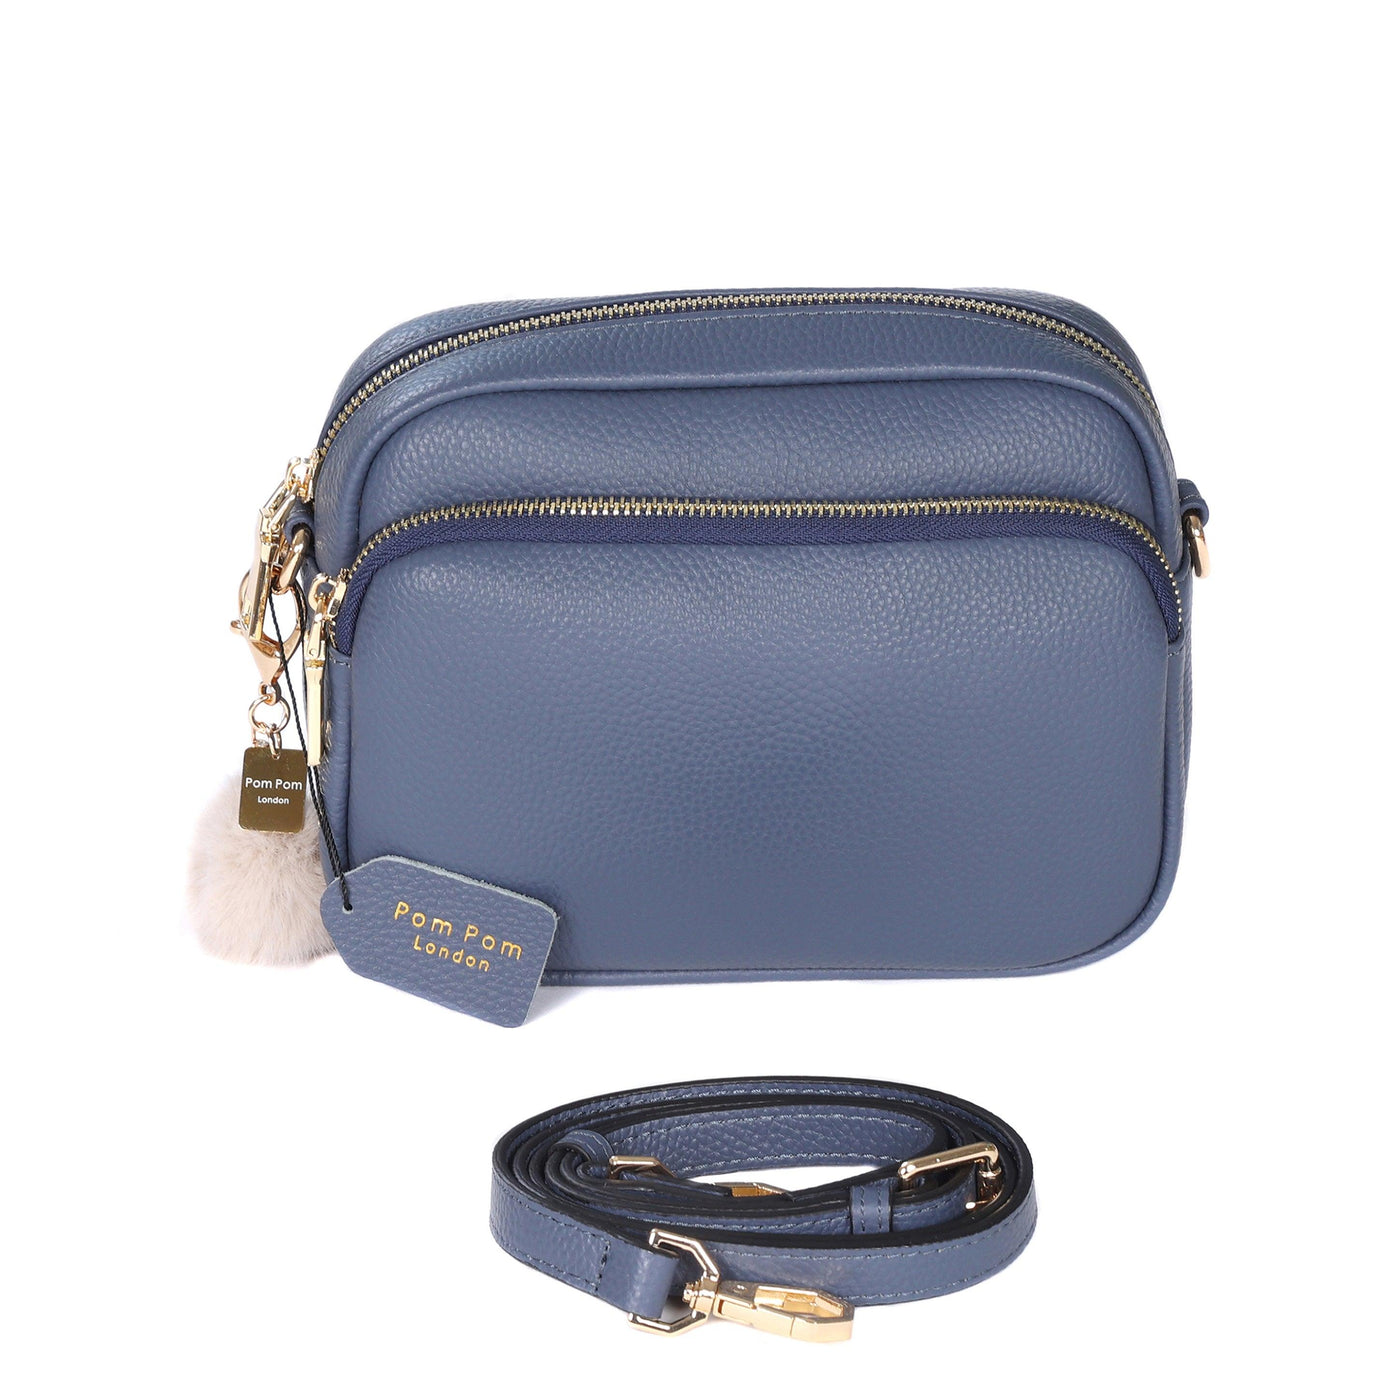 Mayfair Bag Slate Blue & Accessories - Pom Pom London